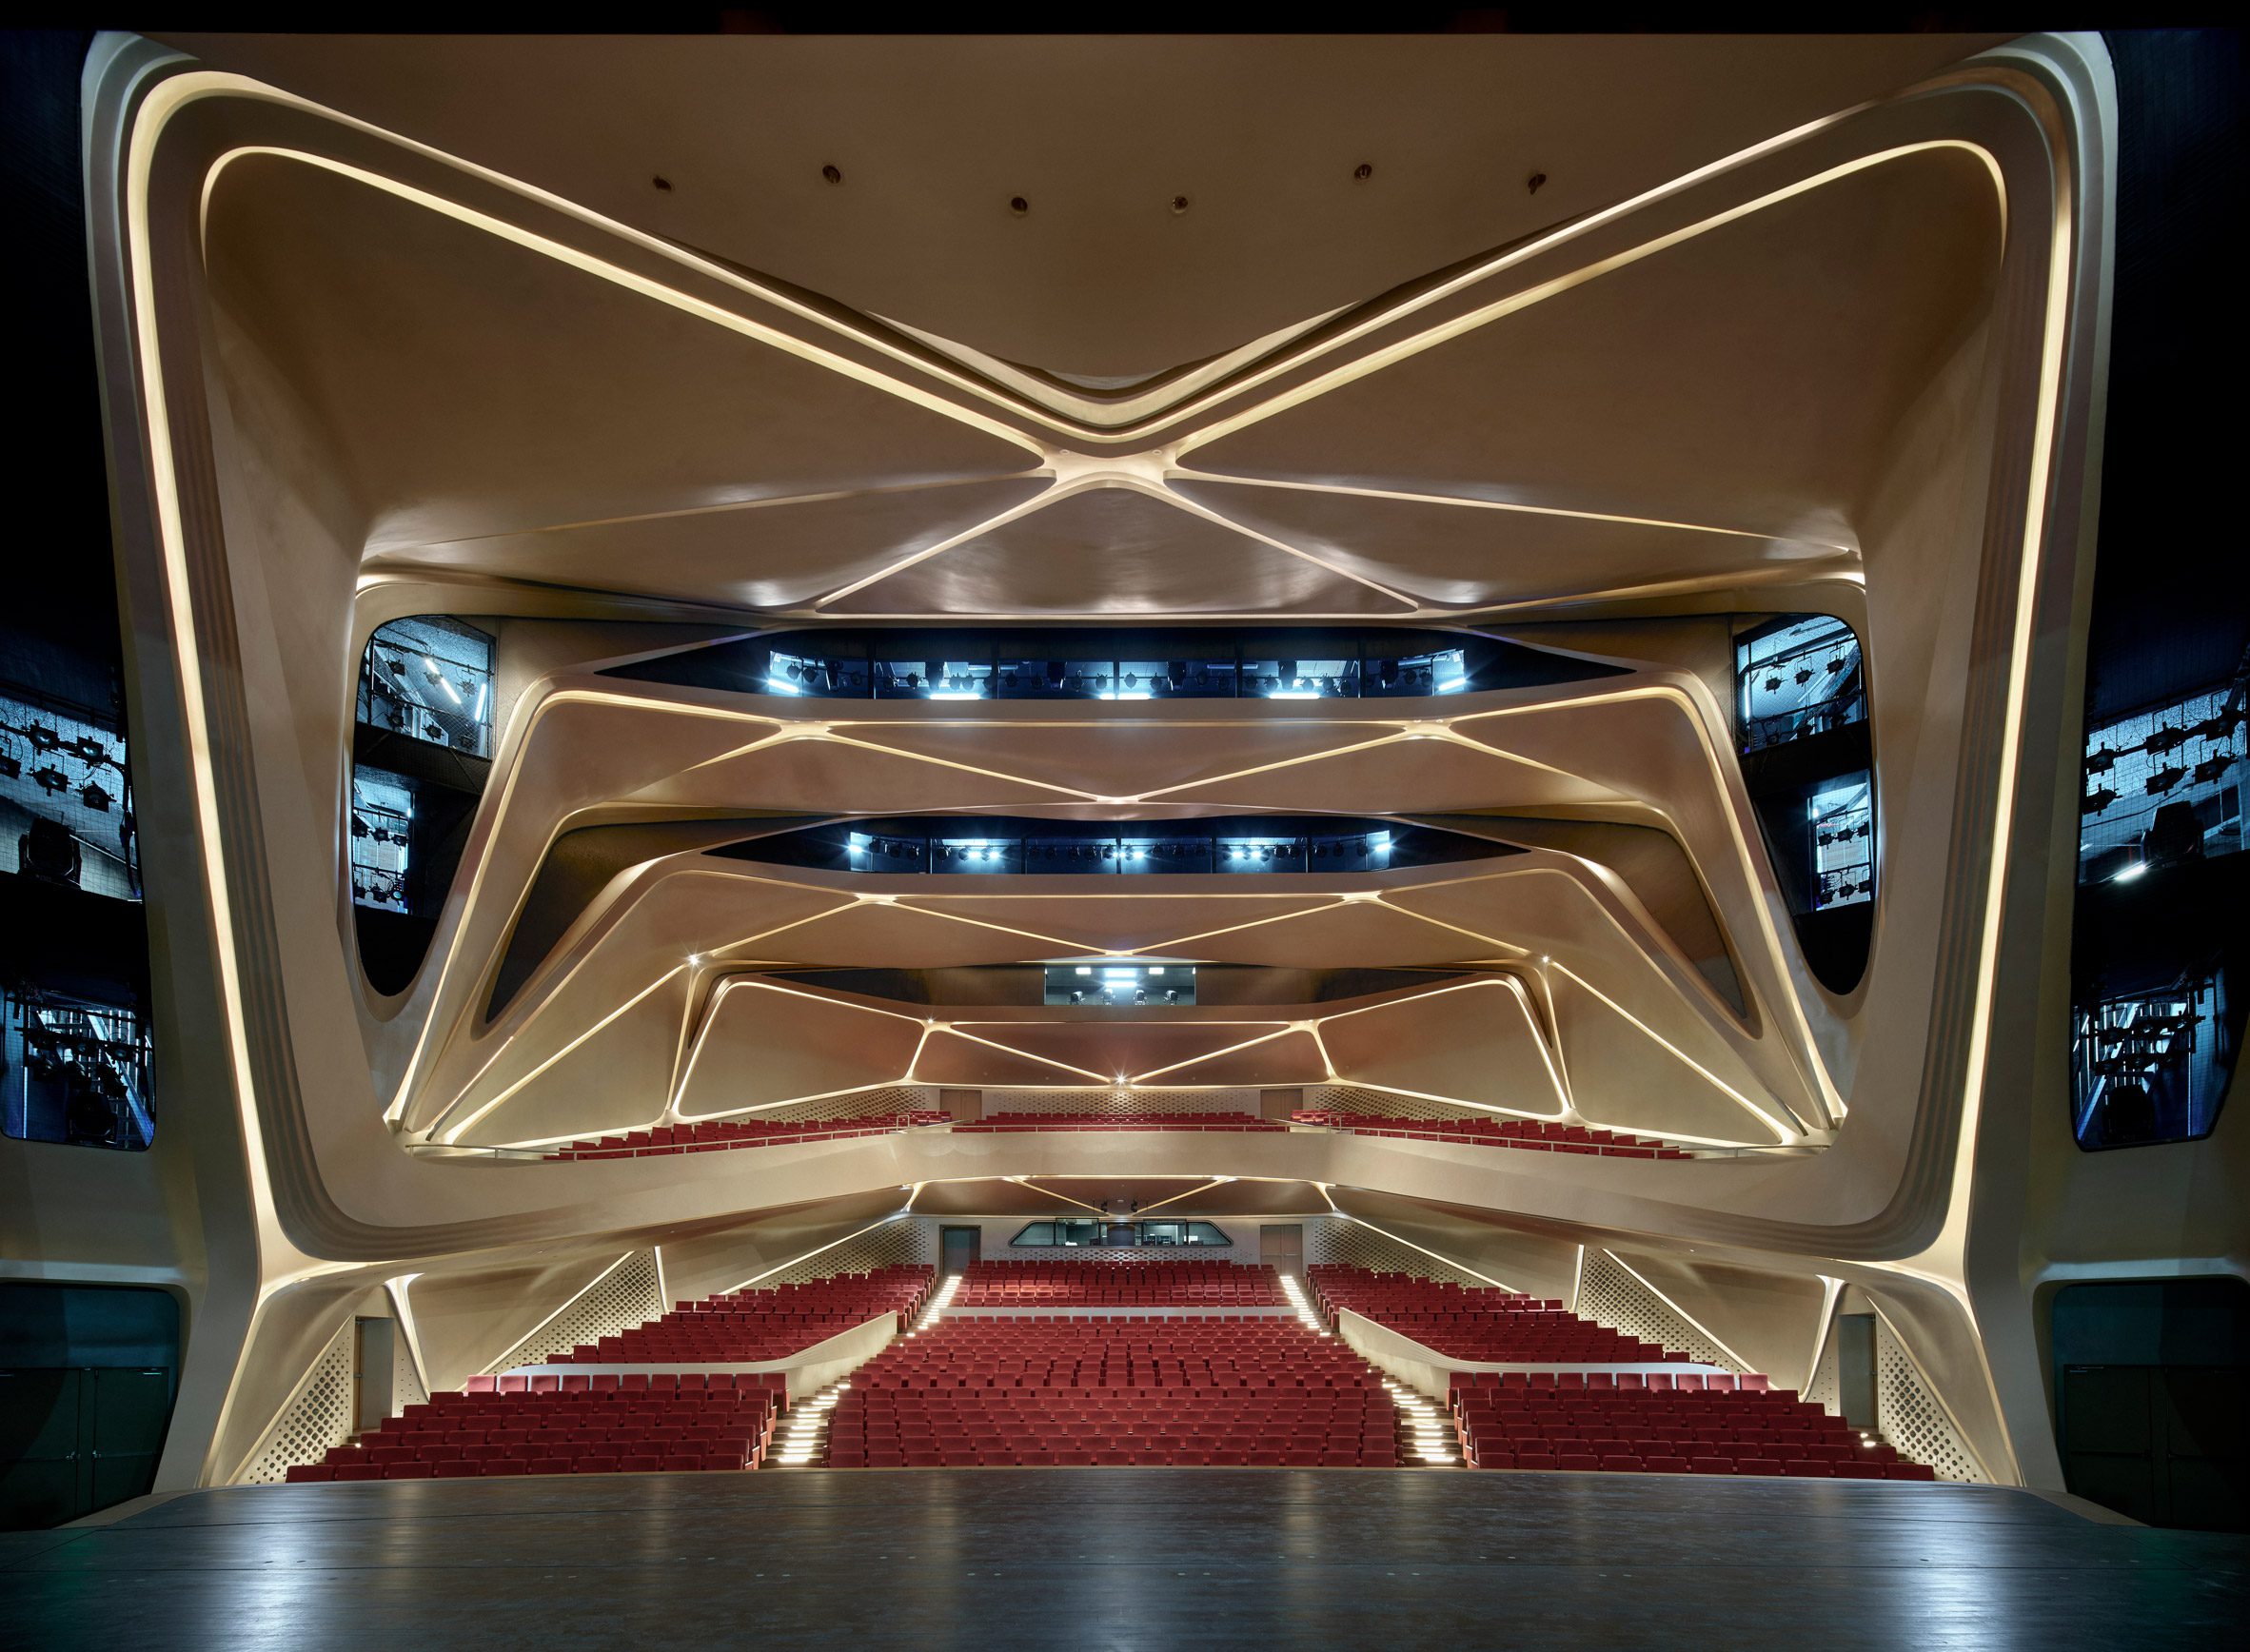 The Grand Theatre of Zhuhai Jinwan Civic Art Centre by Zaha Hadid Architects